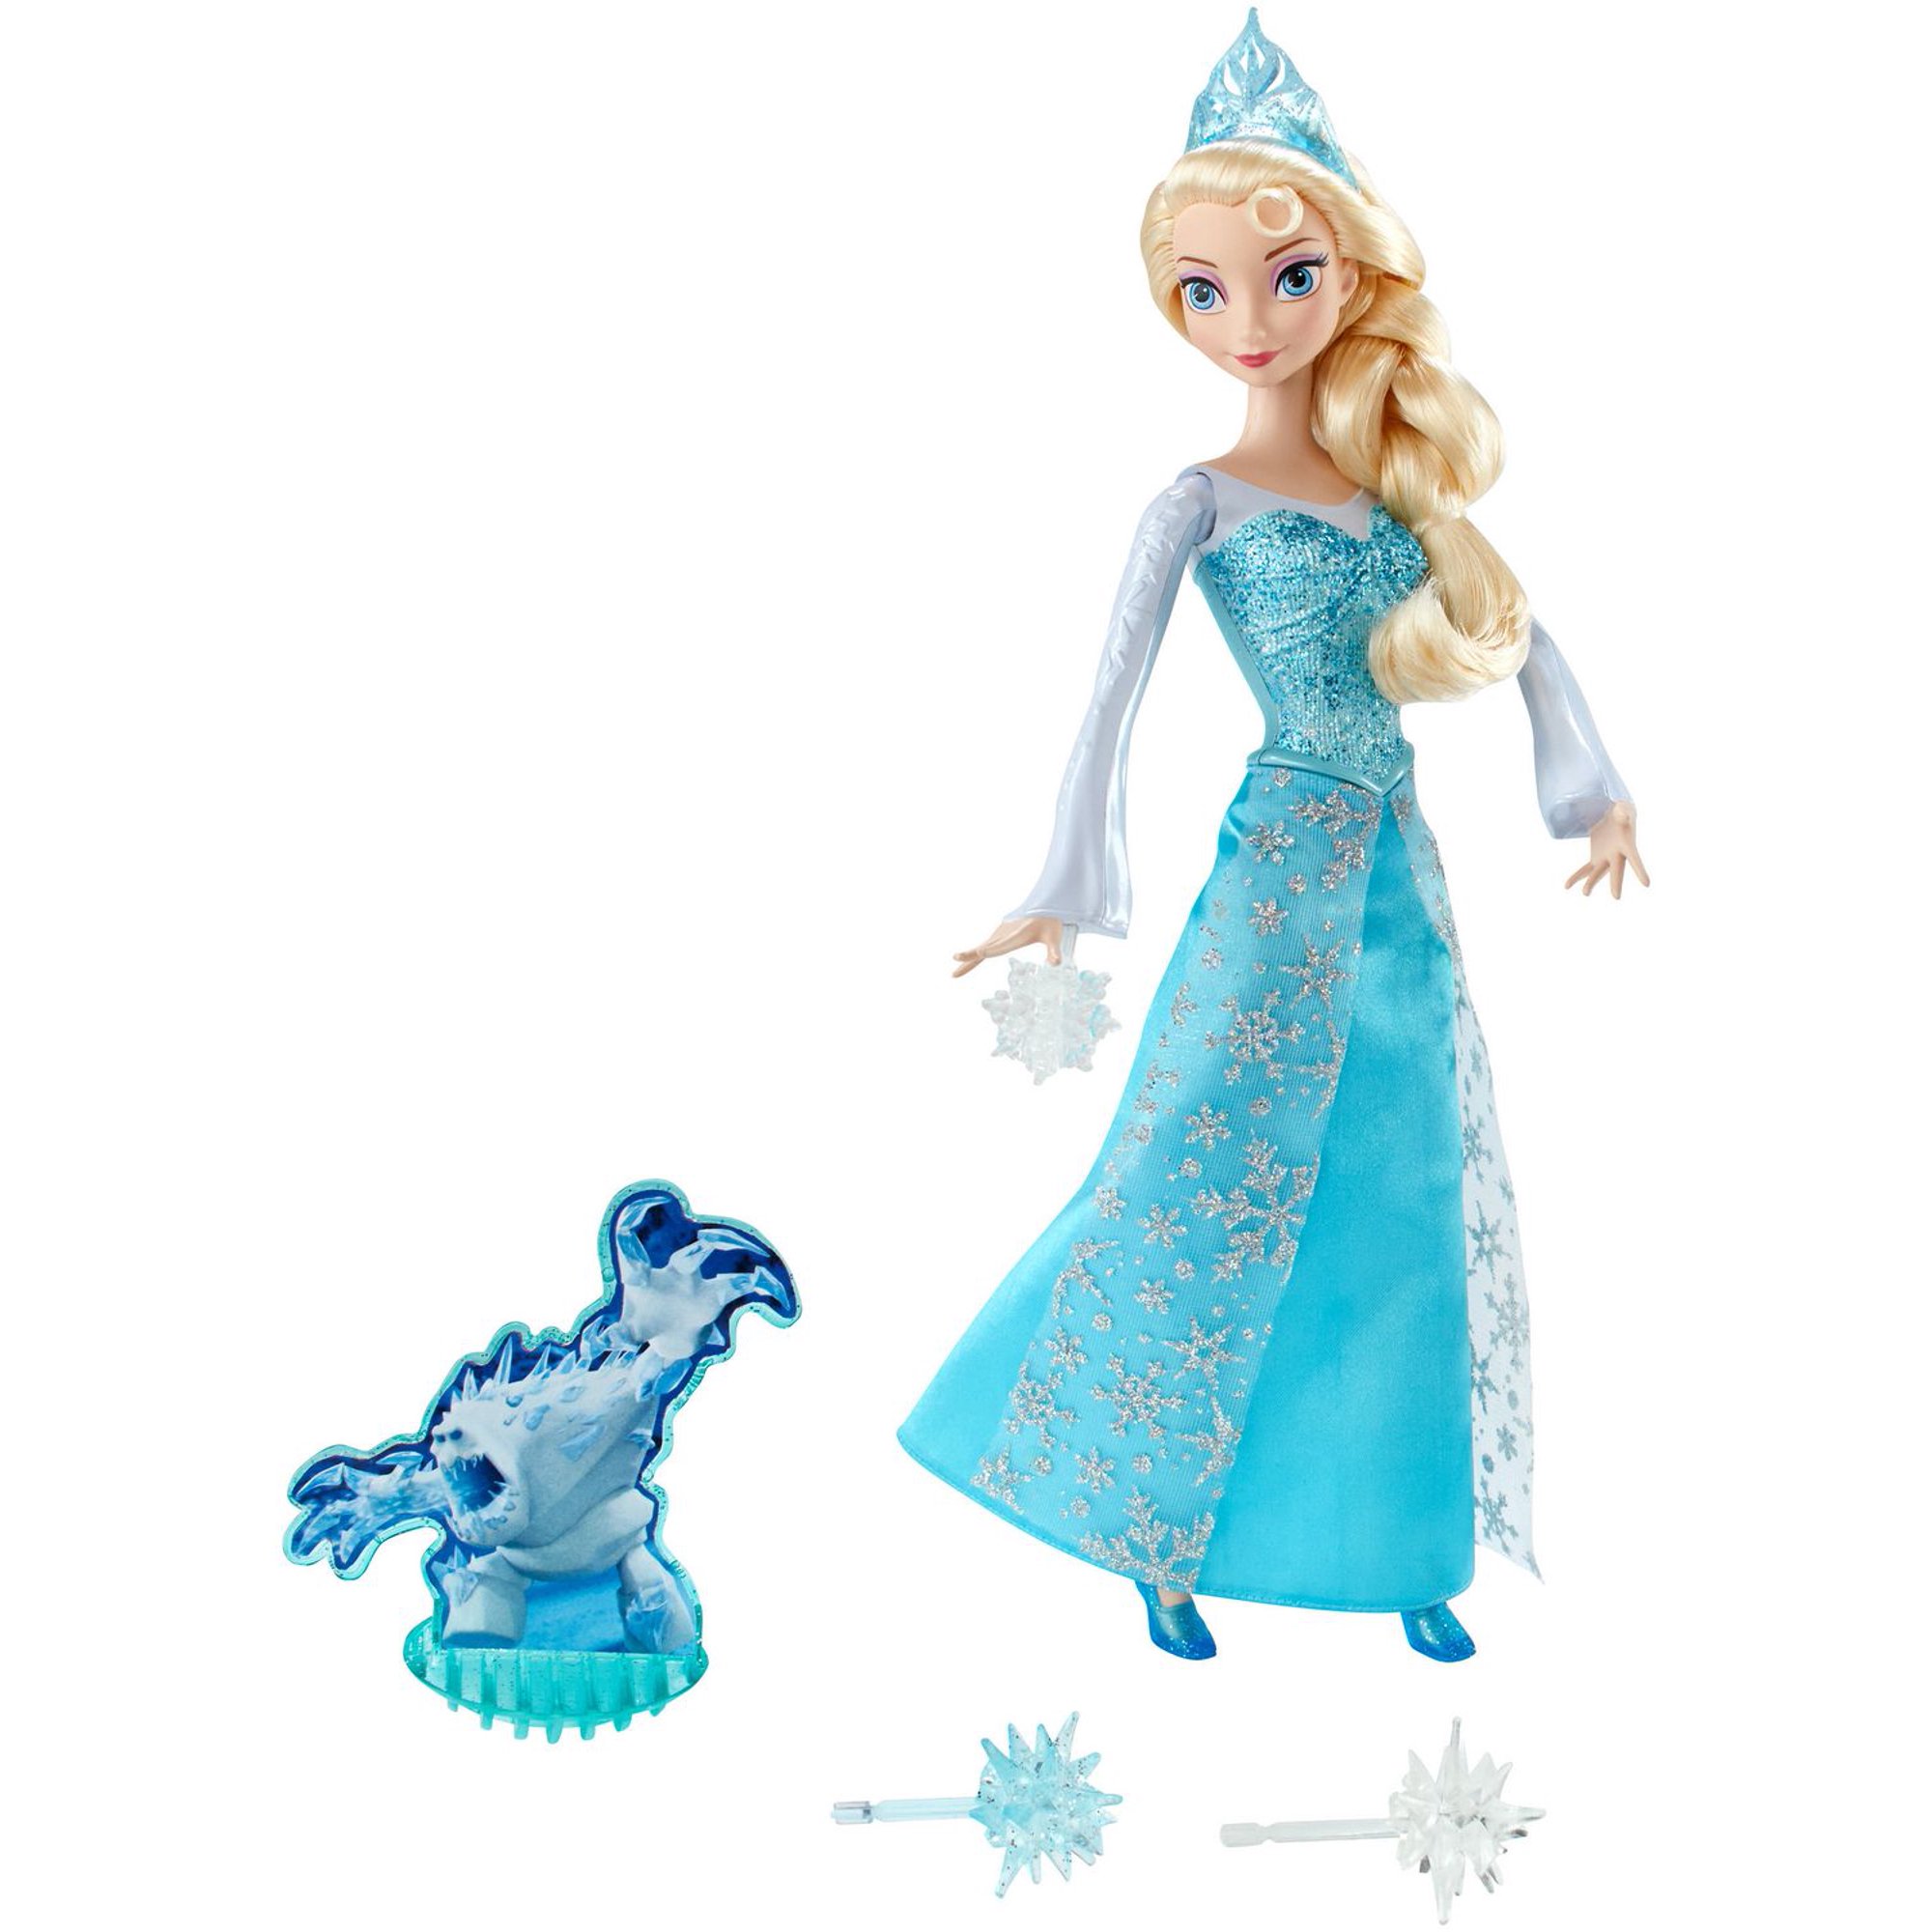 Disney Junior's Frozen Elsa Ice Powers Sublimated Pullover Top, Medium 